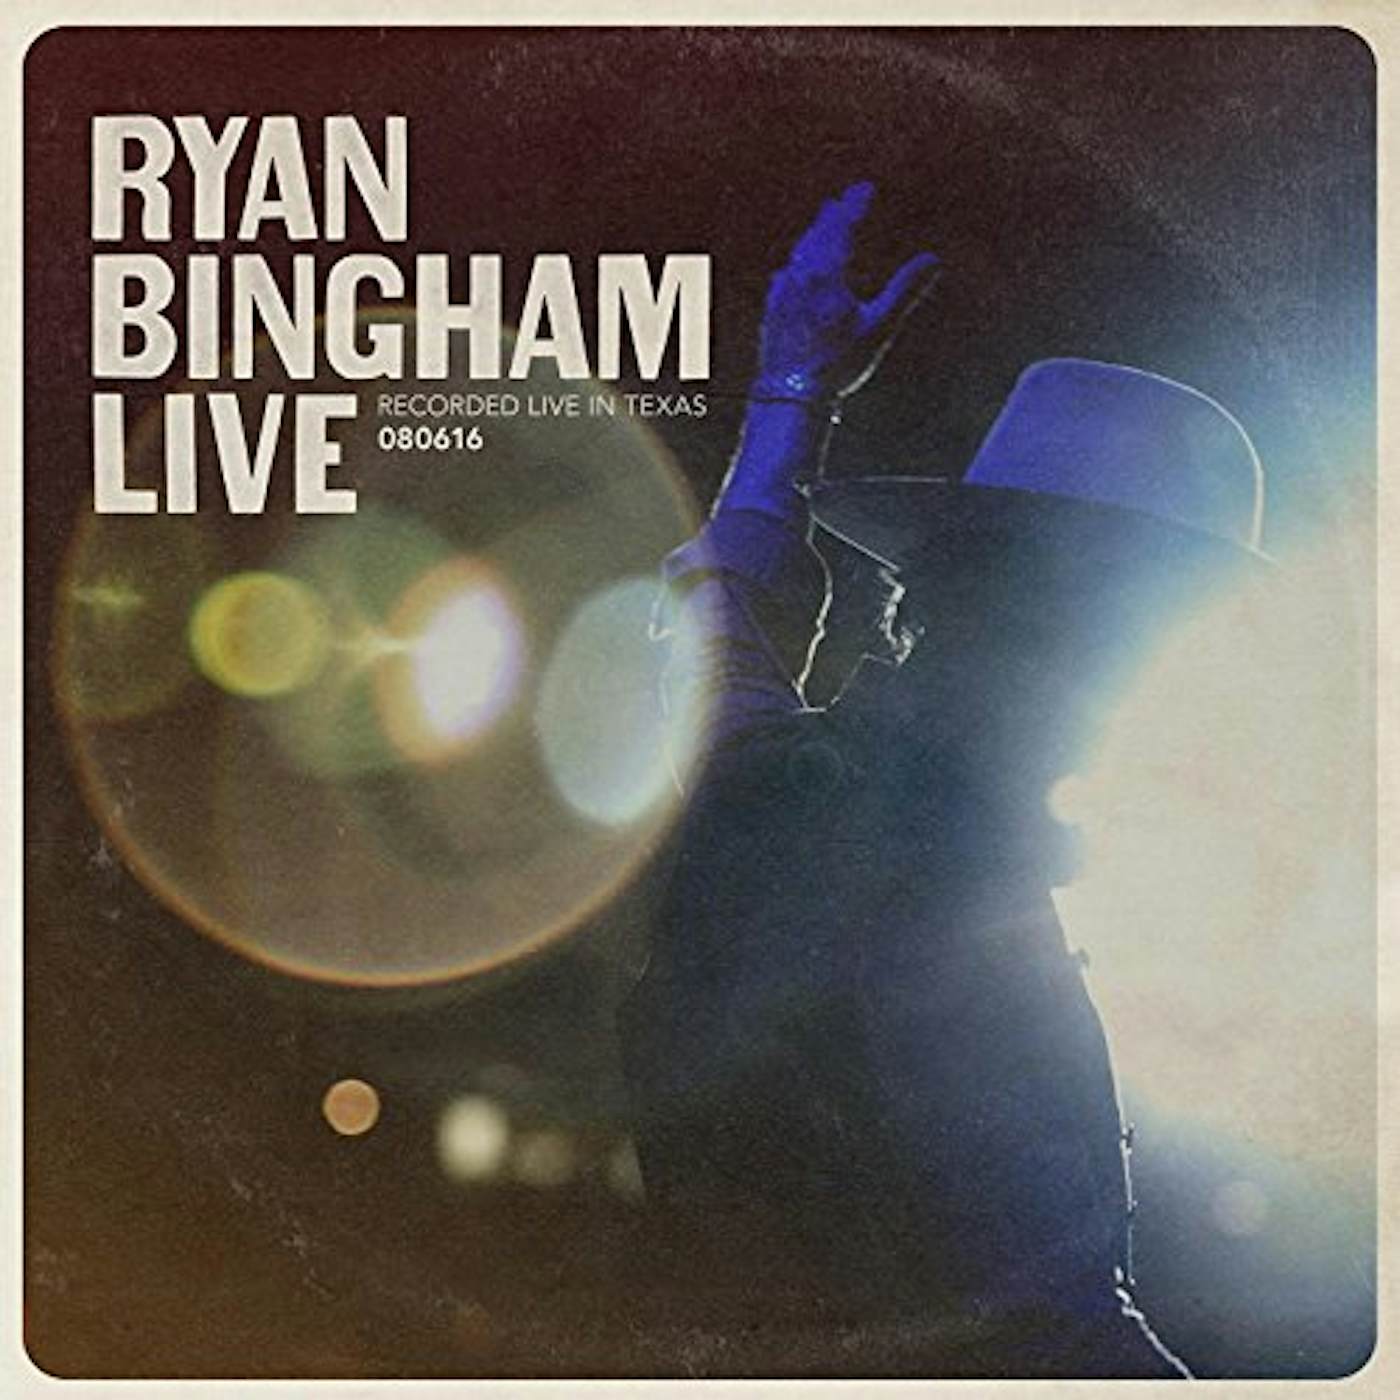 RYAN BINGHAM LIVE CD